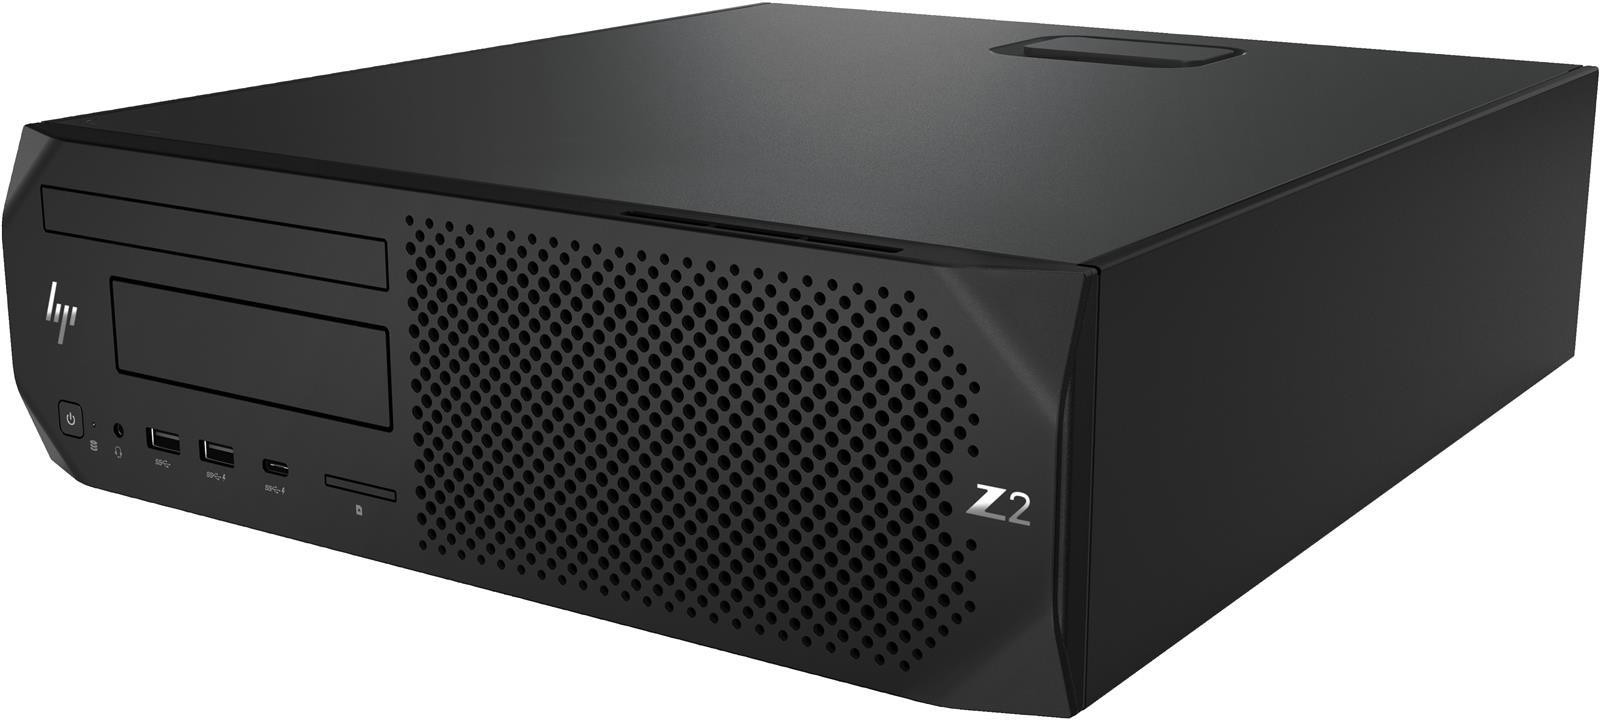 HP Z2 SFF G4 Workstation | Intel Core i5-8500 | 8GB RAM | 500GB HDD | DVD-RW | Win 10 Pro